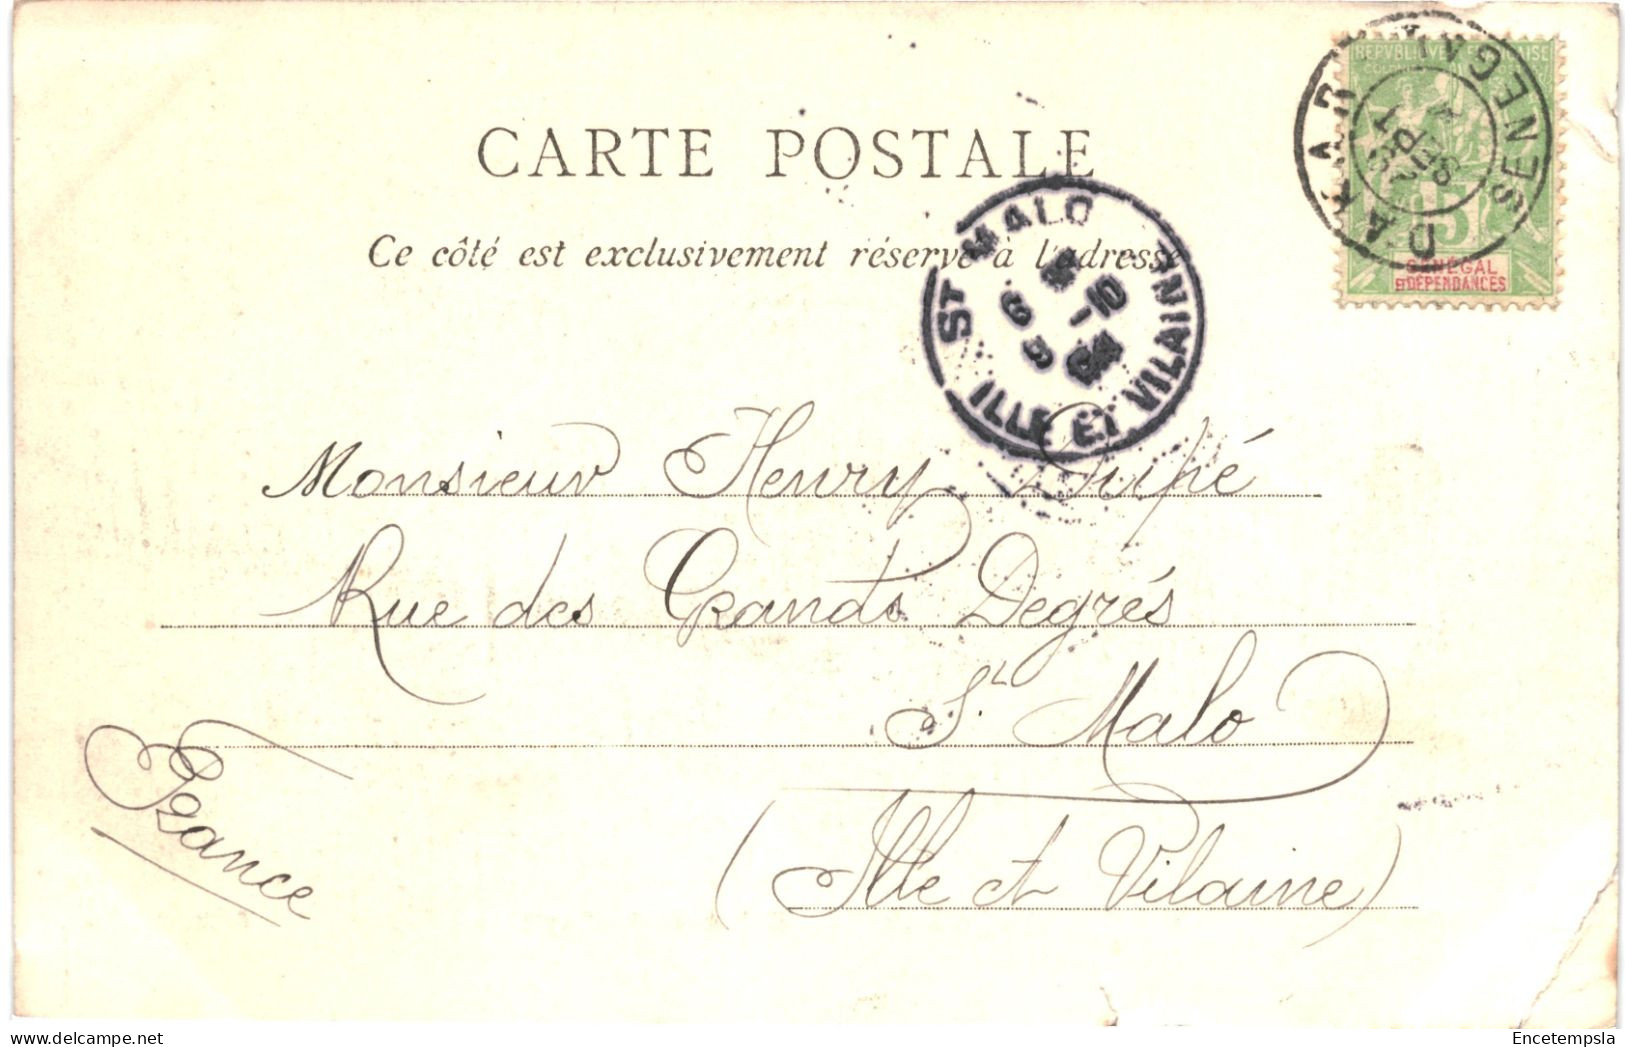 CPA Carte Postale Sénégal Dakar De La Plage  1904 VM80097ok - Senegal